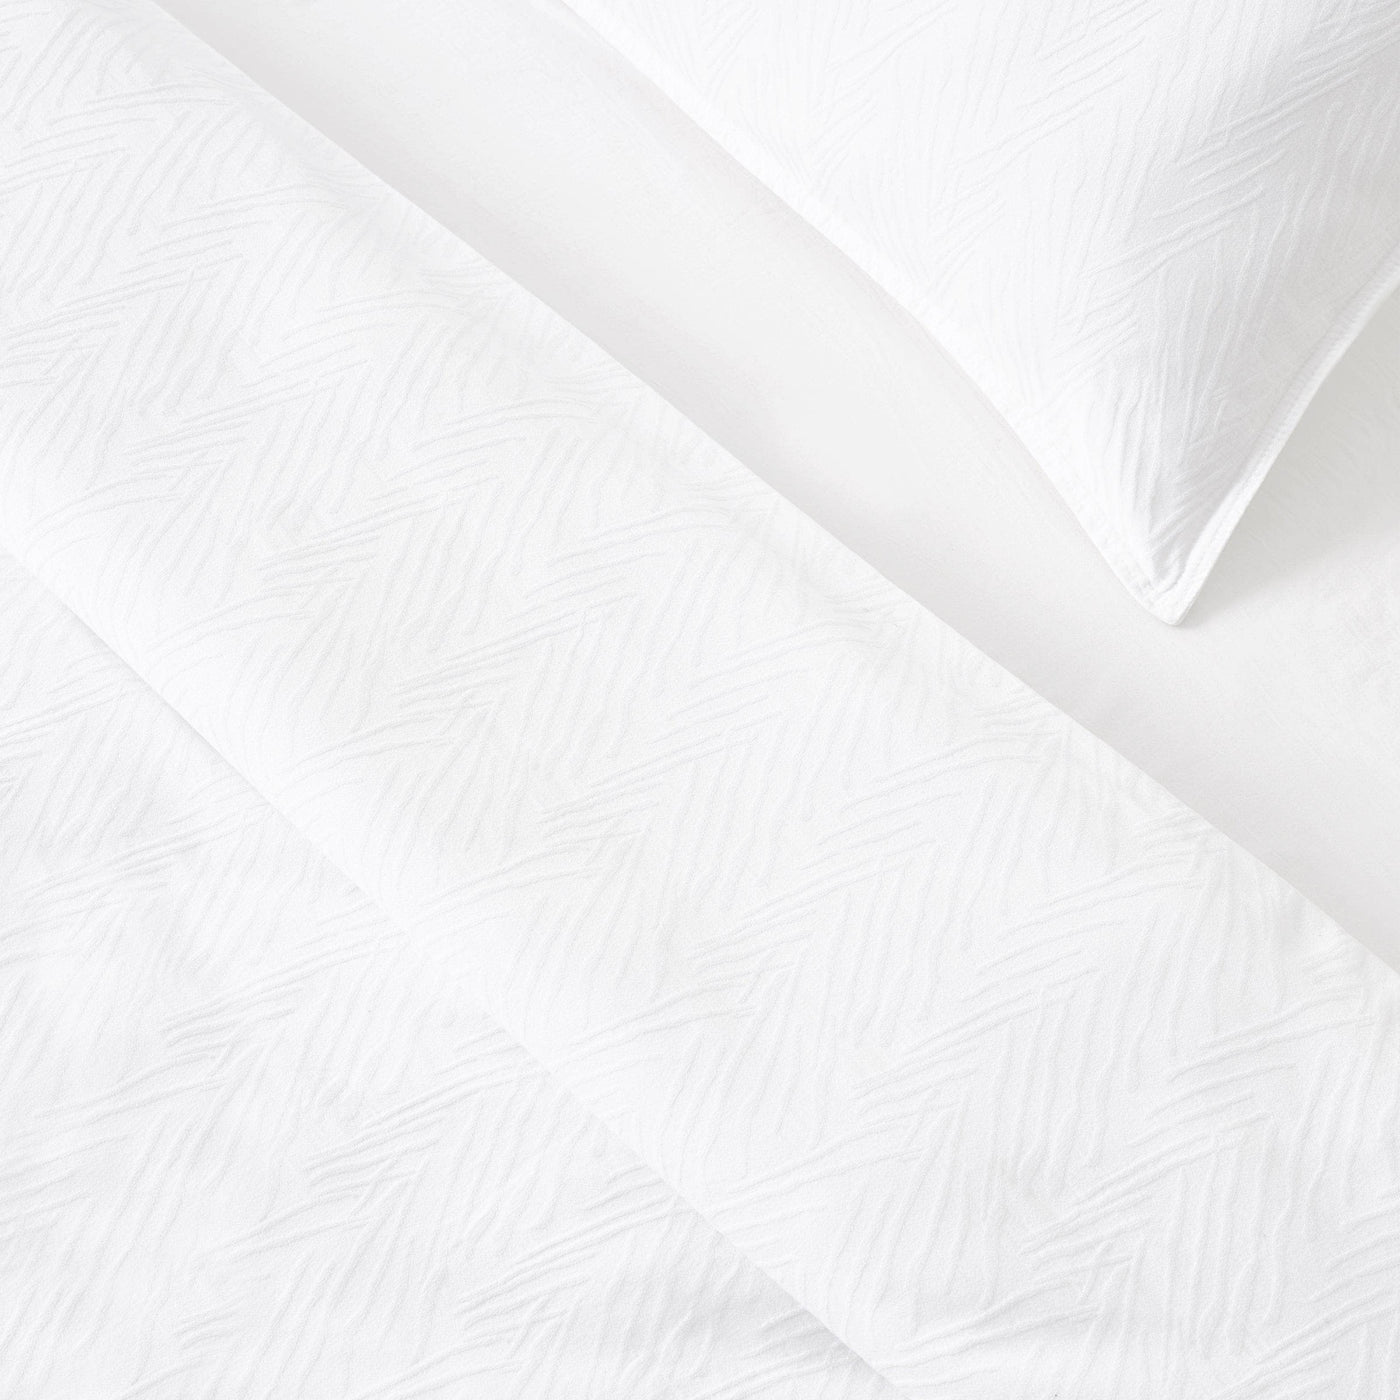 Freddie 100% Turkish Cotton Jacquard 300 TC Duvet Cover Set + Fitted Sheet, White, Double Size Bedding Sets sazy.com